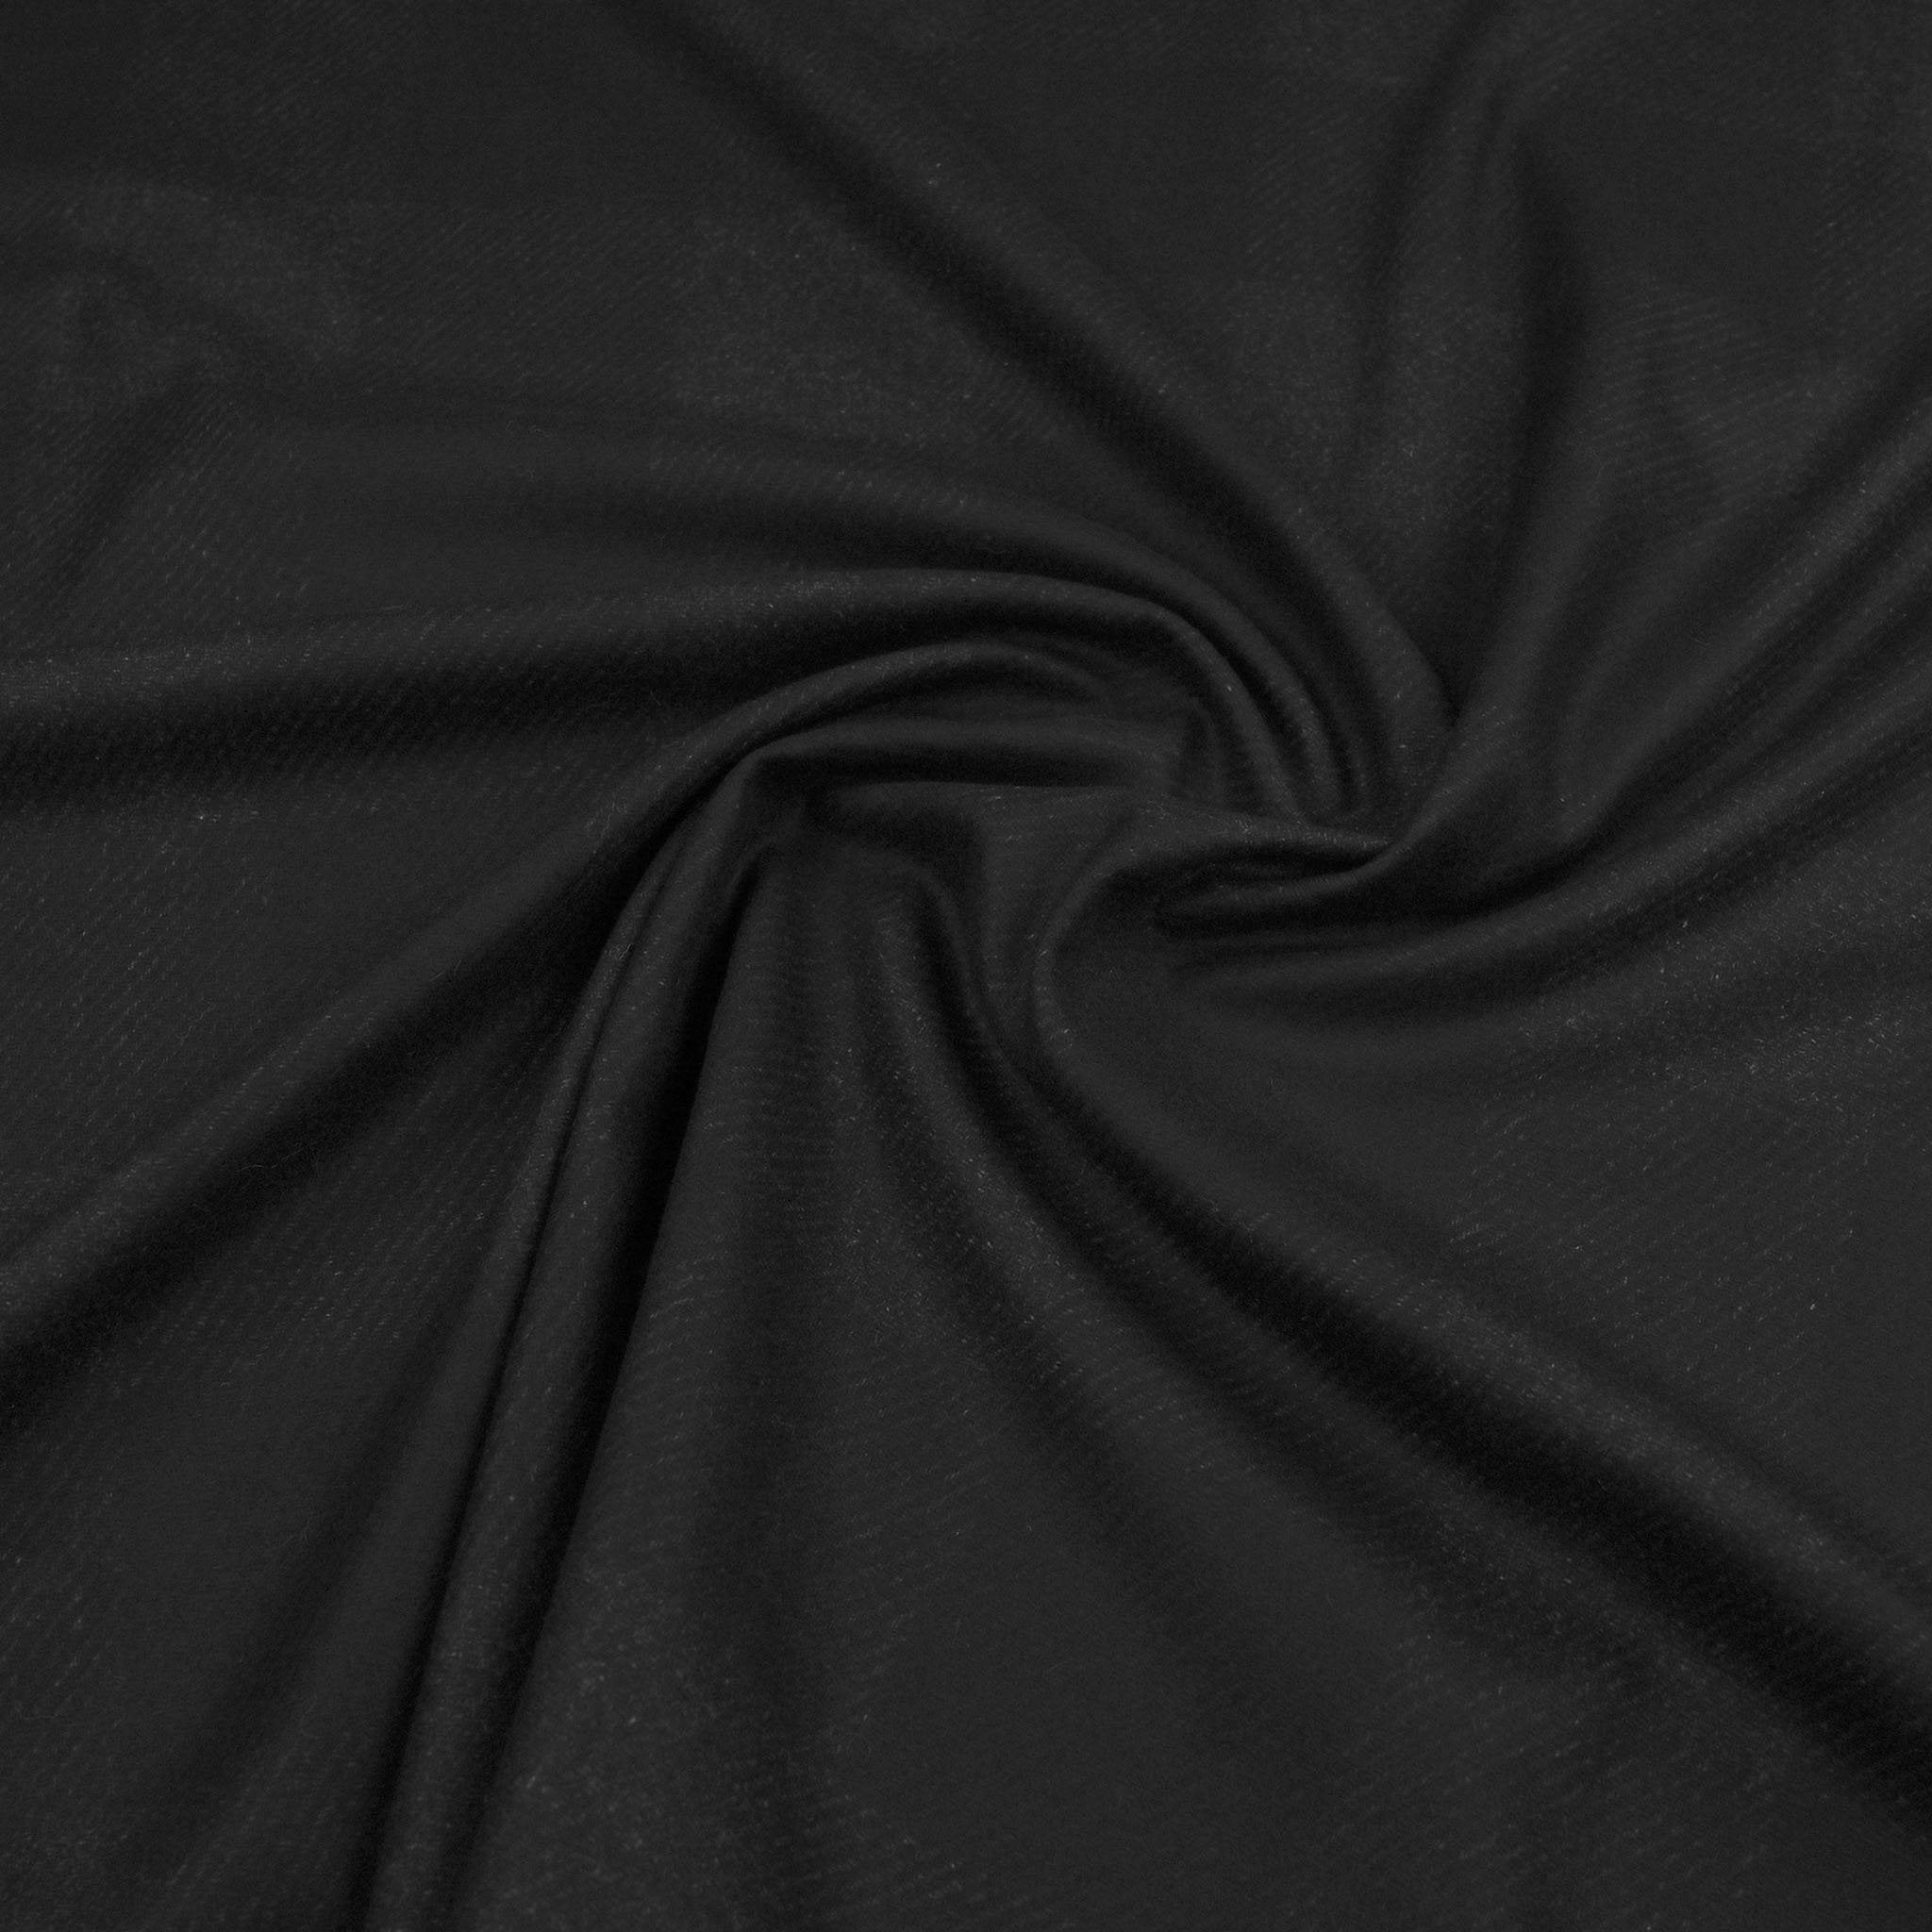 Black Fancy Coating Fabric 98724